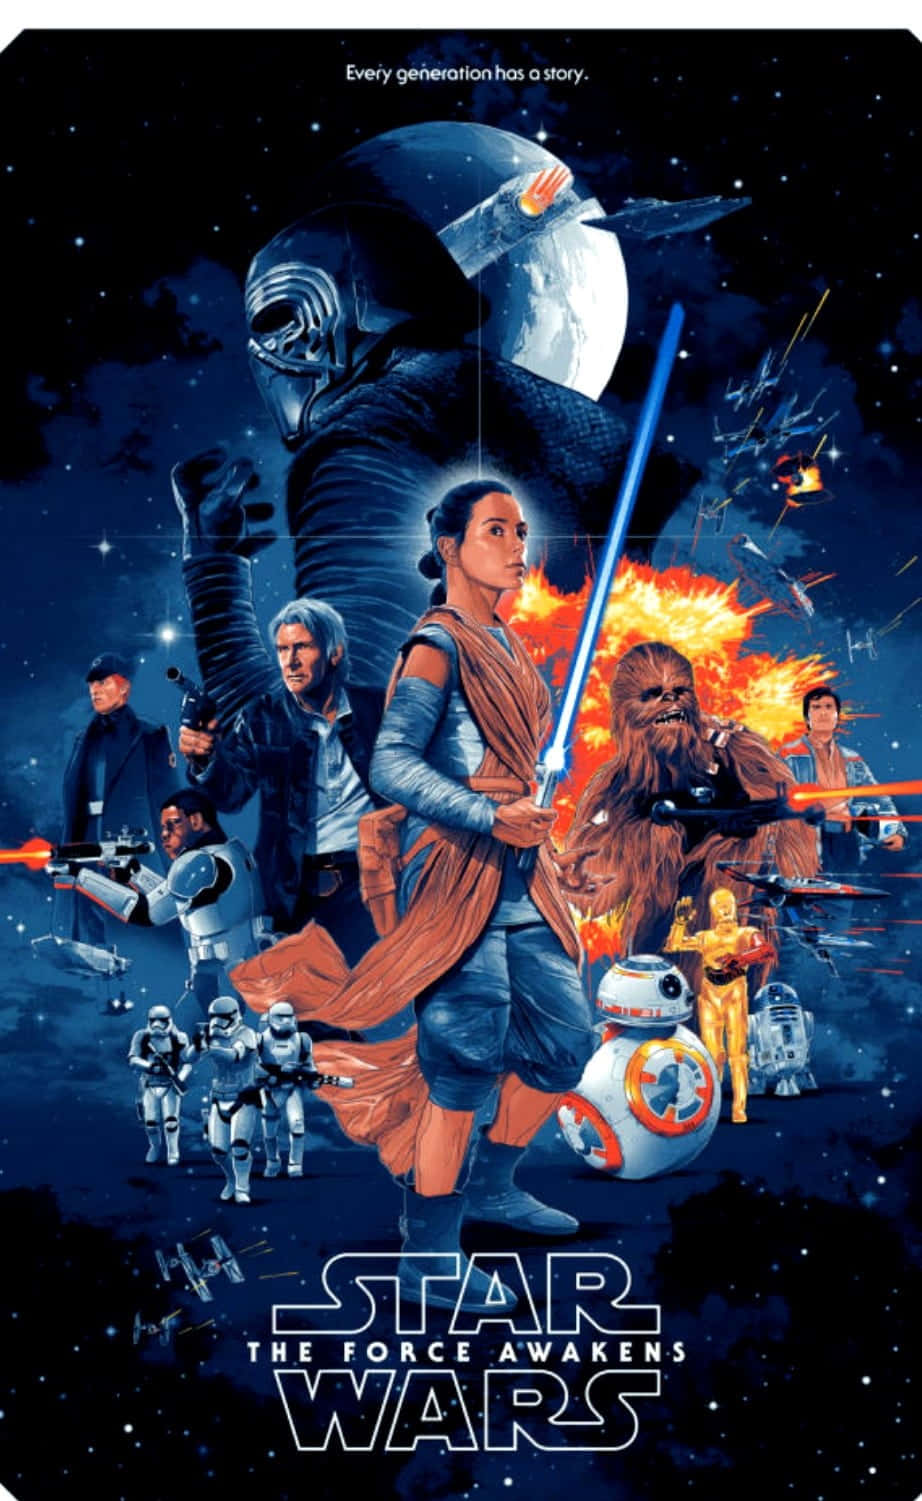 Star Wars The Force Awakens Poster Wallpaper